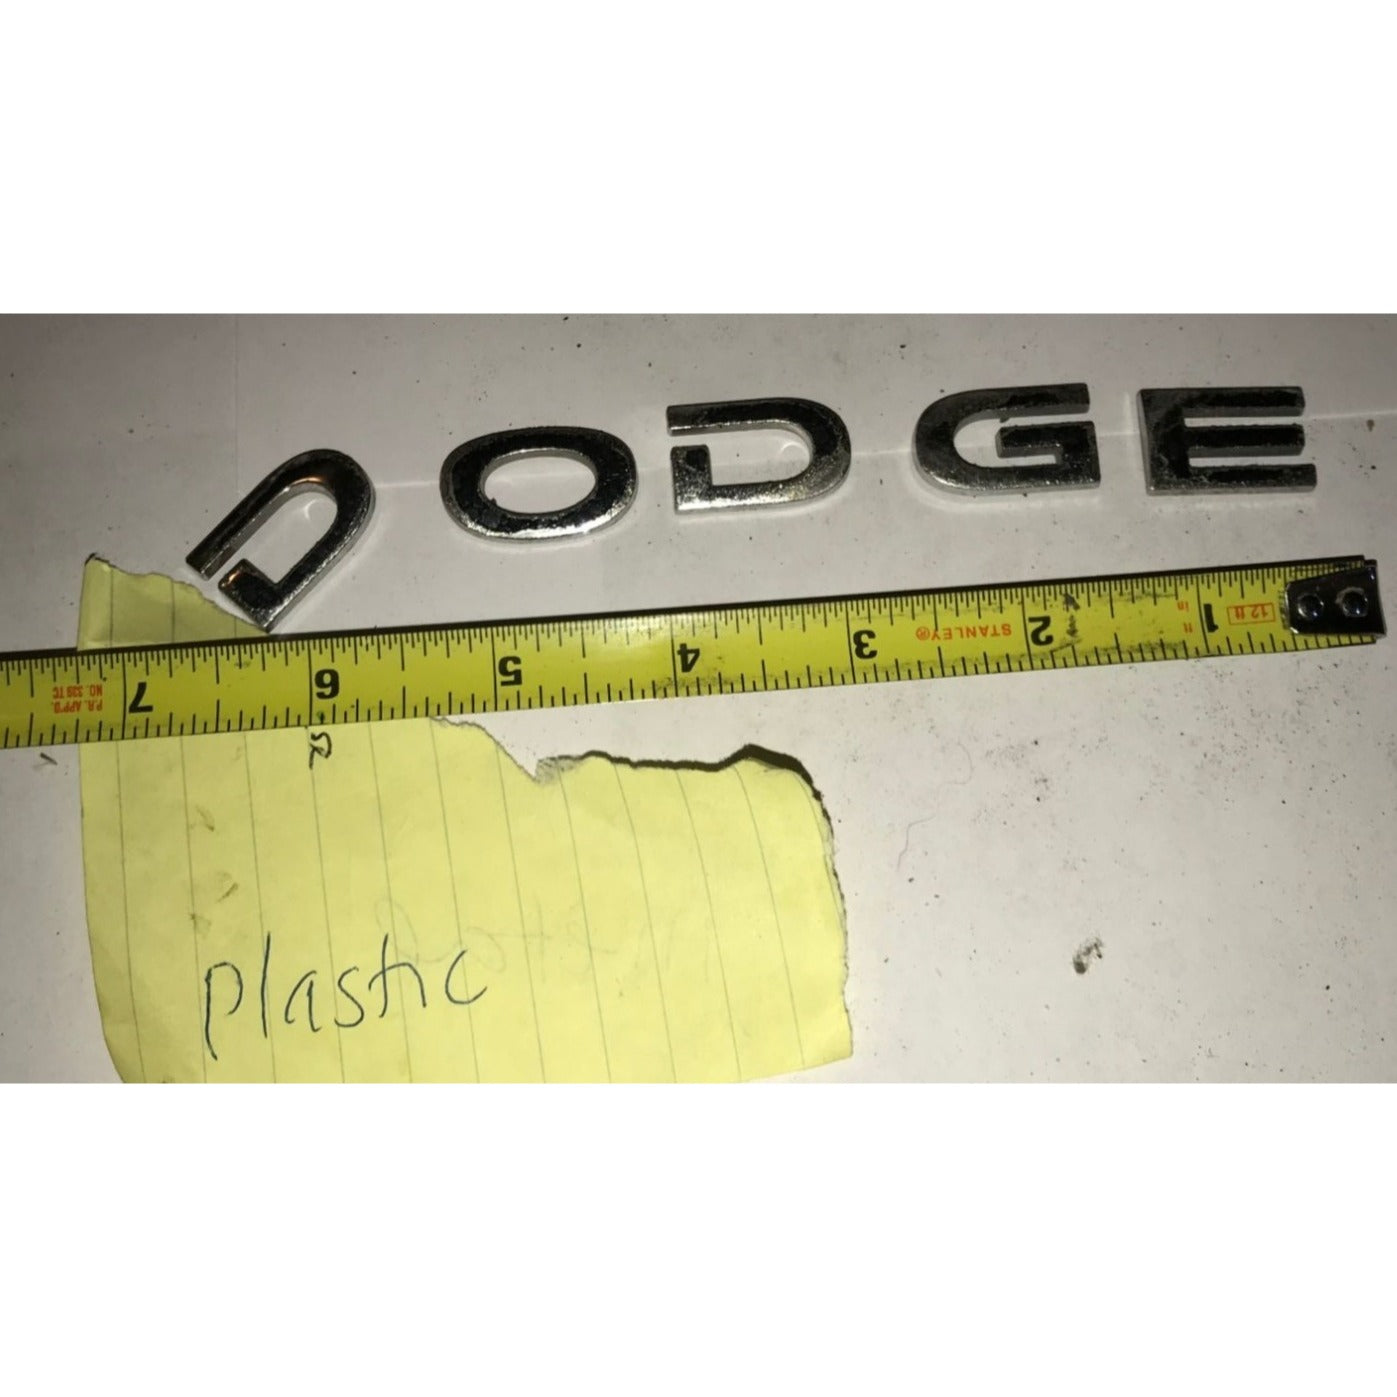 Dodge Silver Plastic Emblem/Auto Patch- About 6 inches